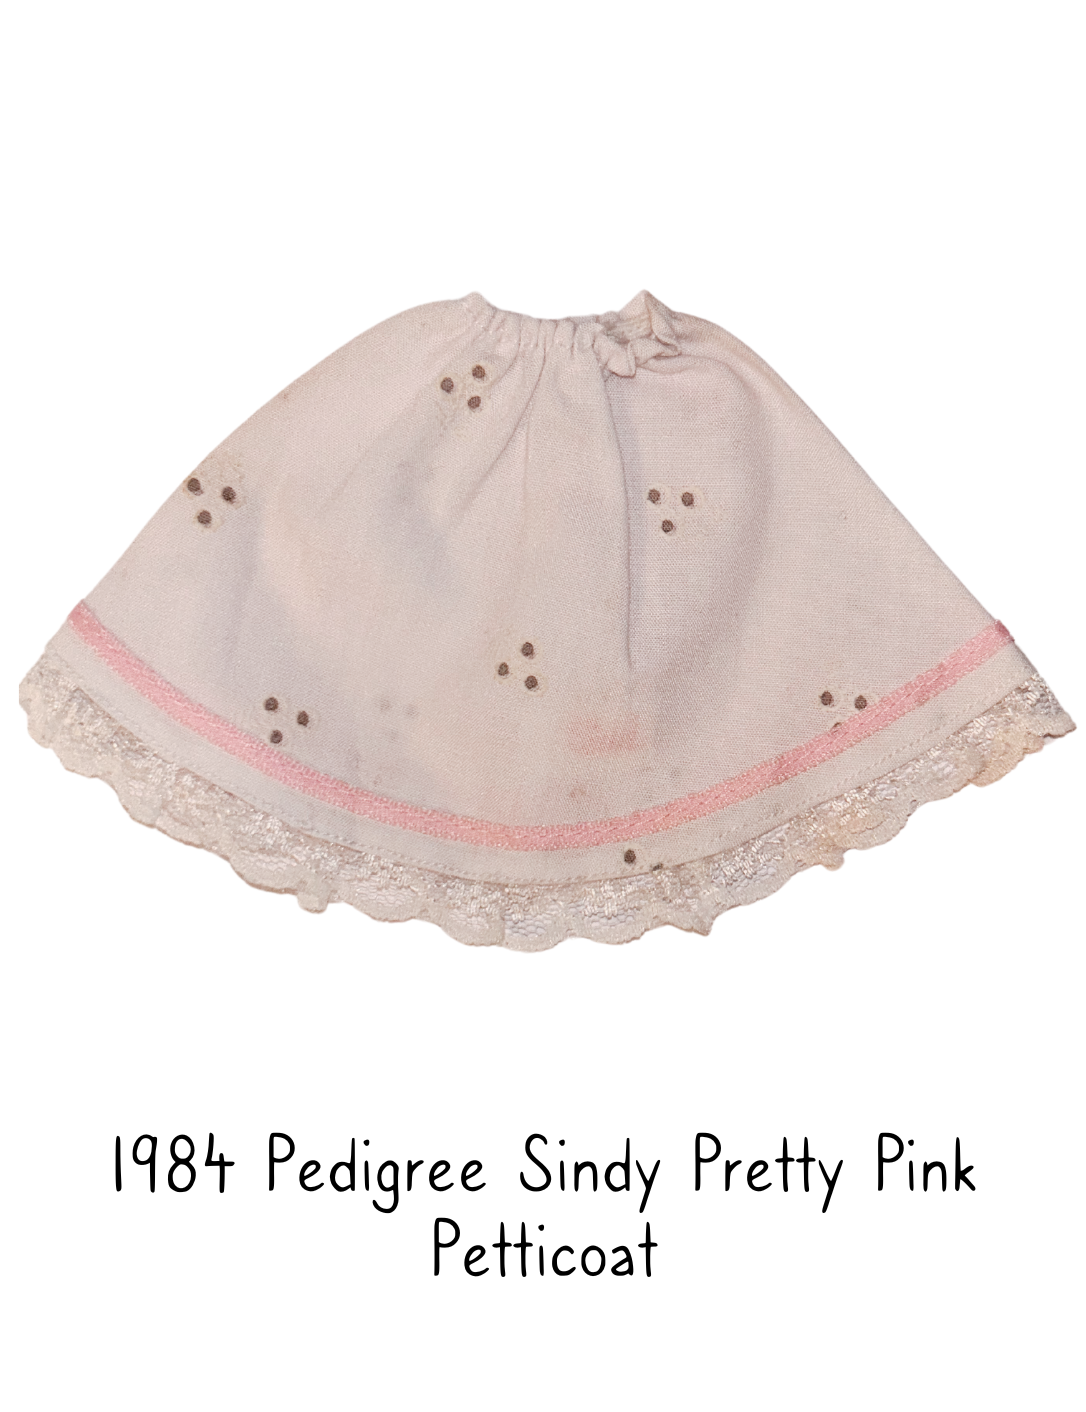 1984 Pedigree Sindy Pretty Pink Lingerie Petticoat